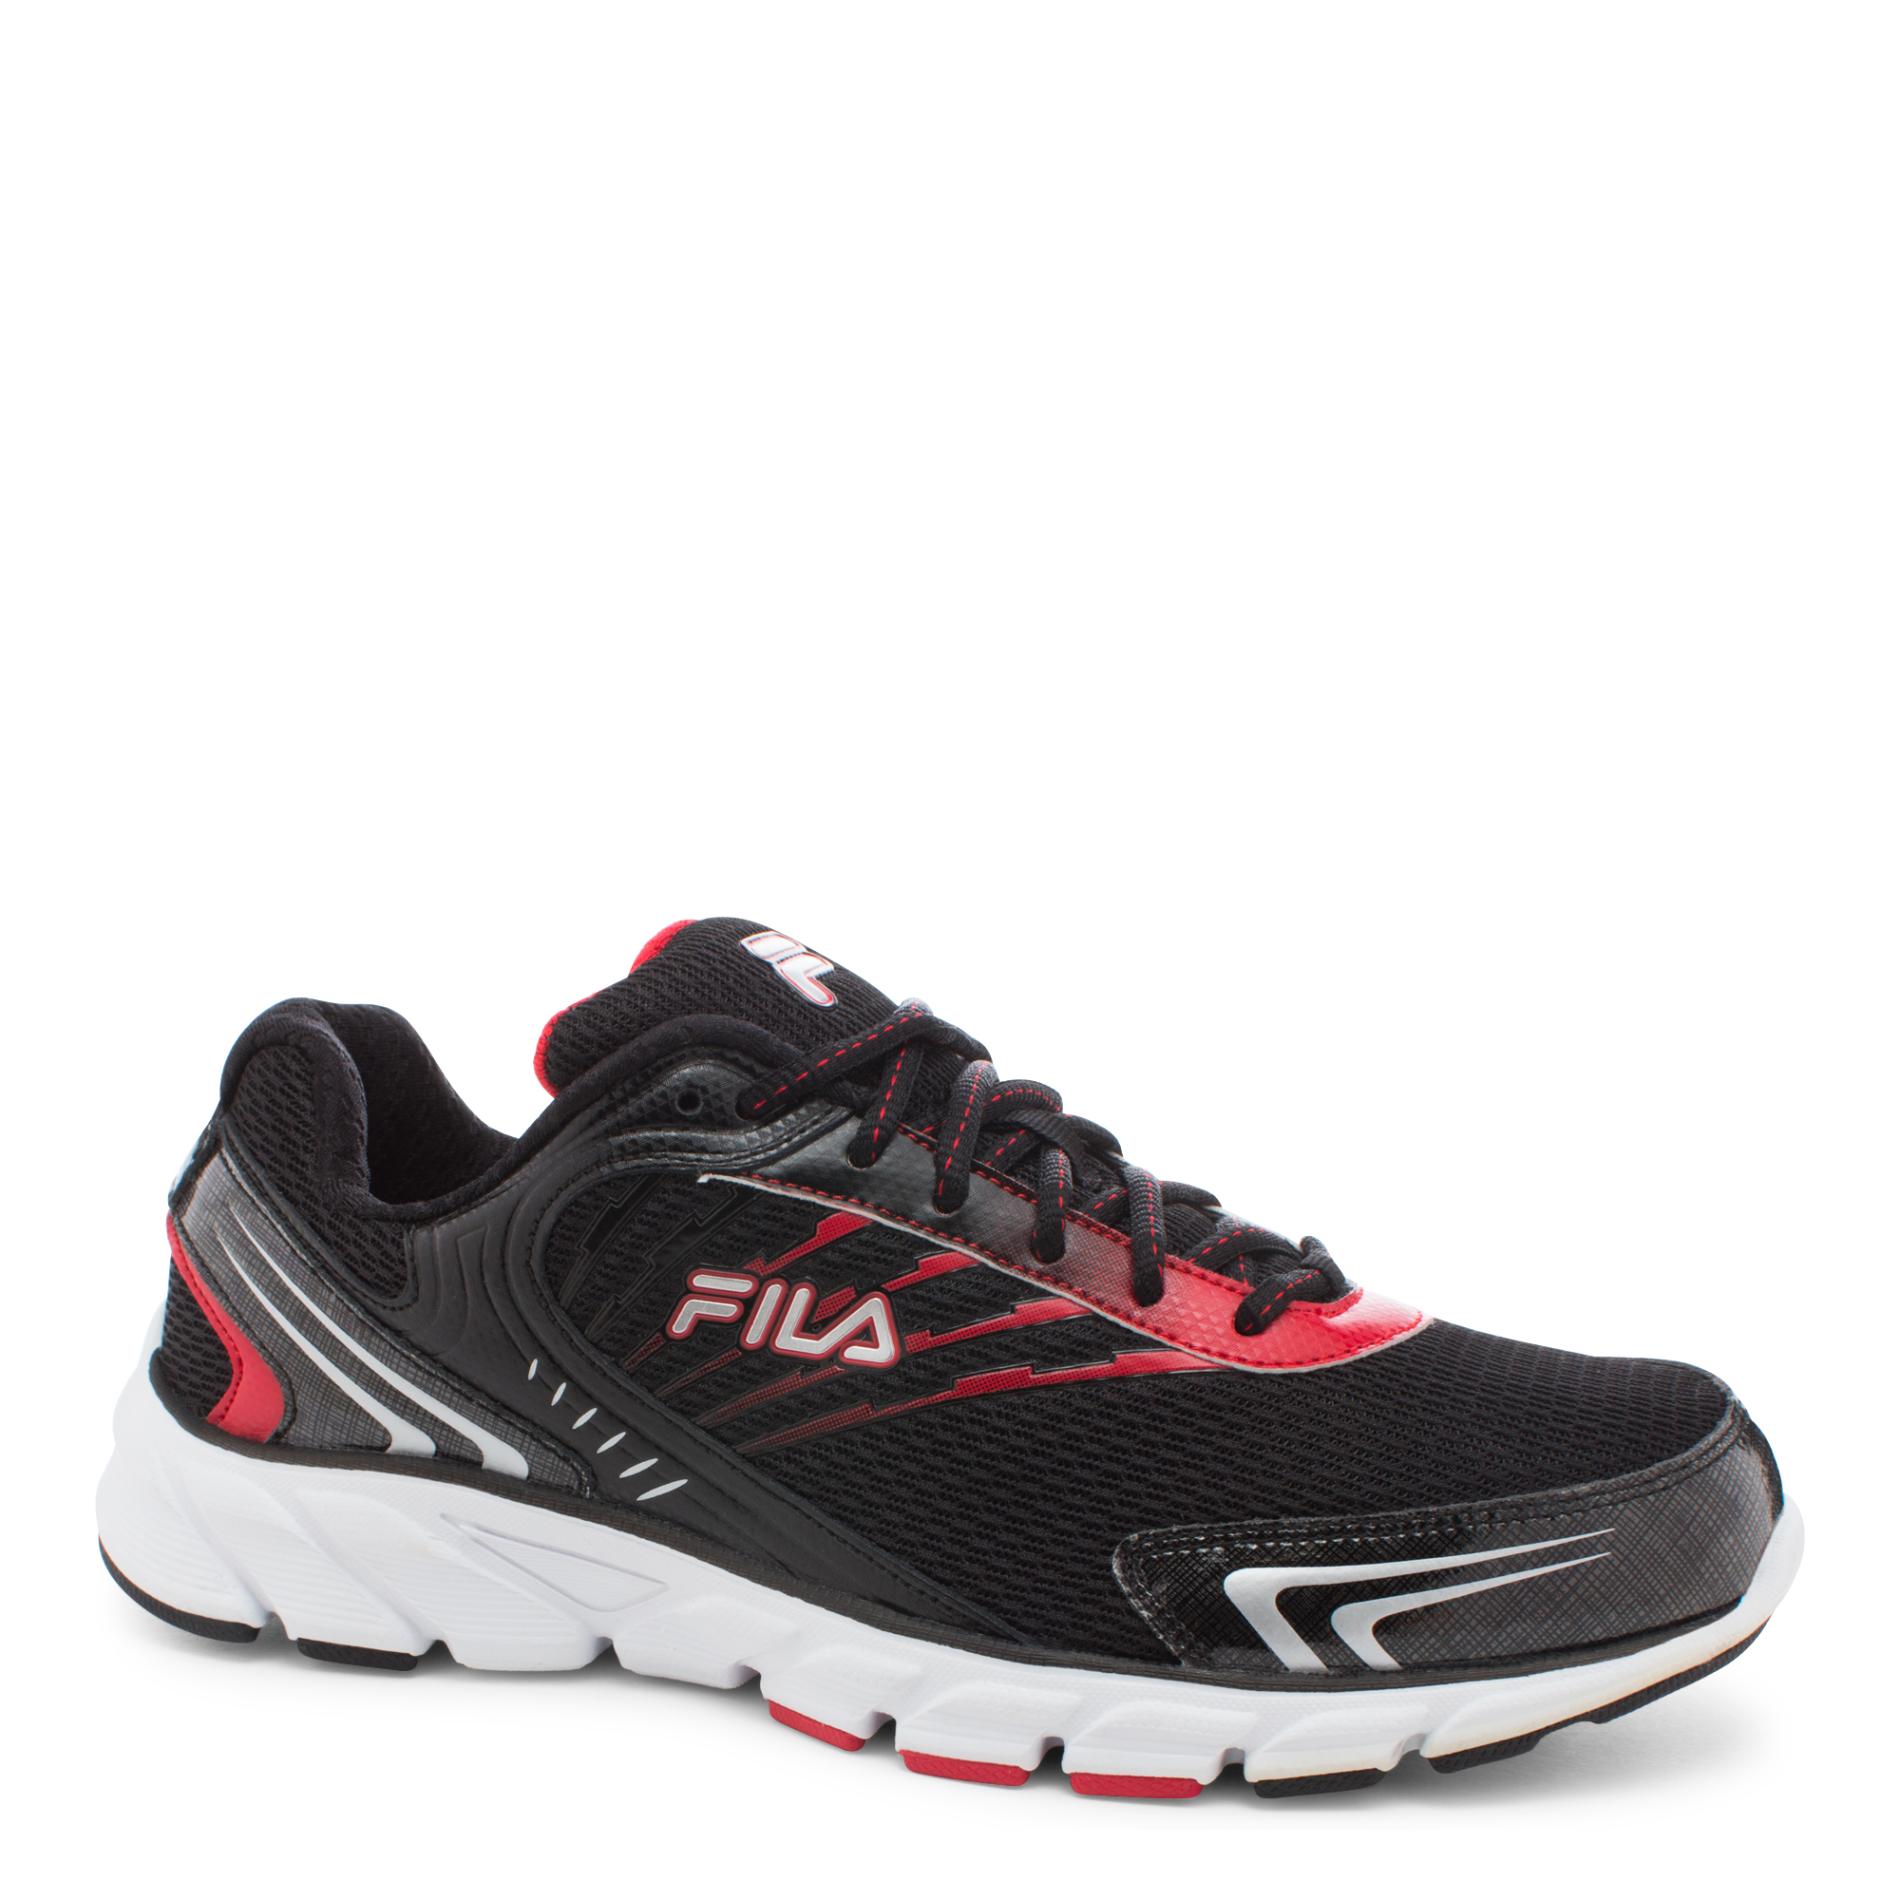 Fila Men's Maranello Running Shoe - Black/Red